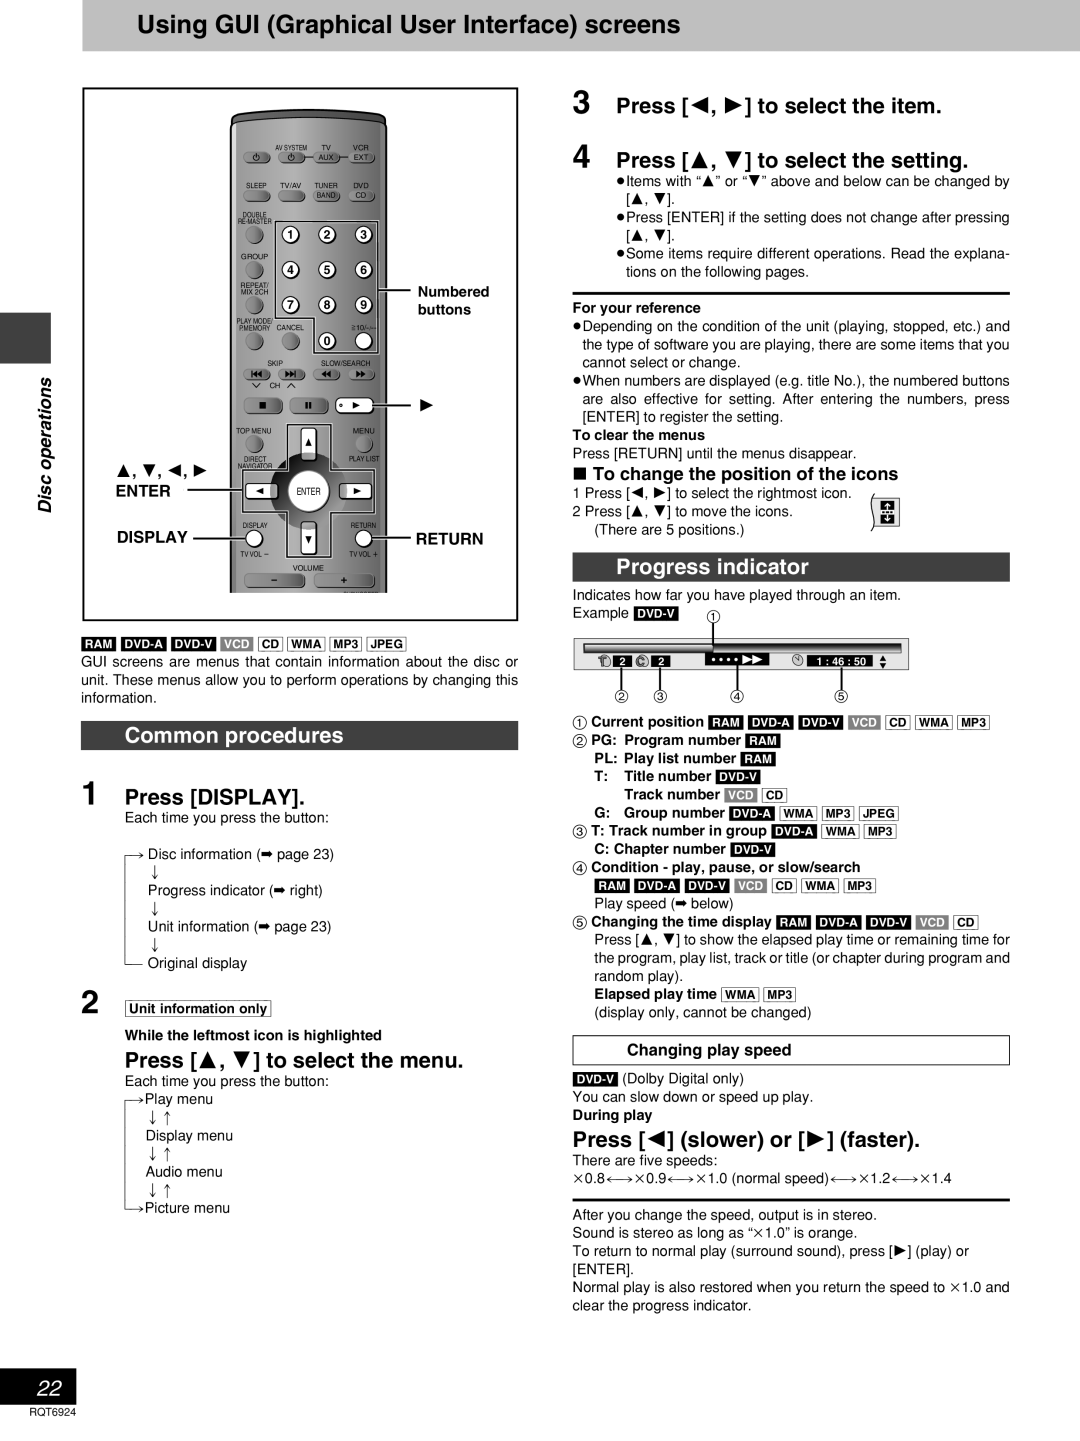 Panasonic SC-DT310 manual Using GUI Graphical User Interface screens, 3Press 2, 1 to select the item, Progress indicator 